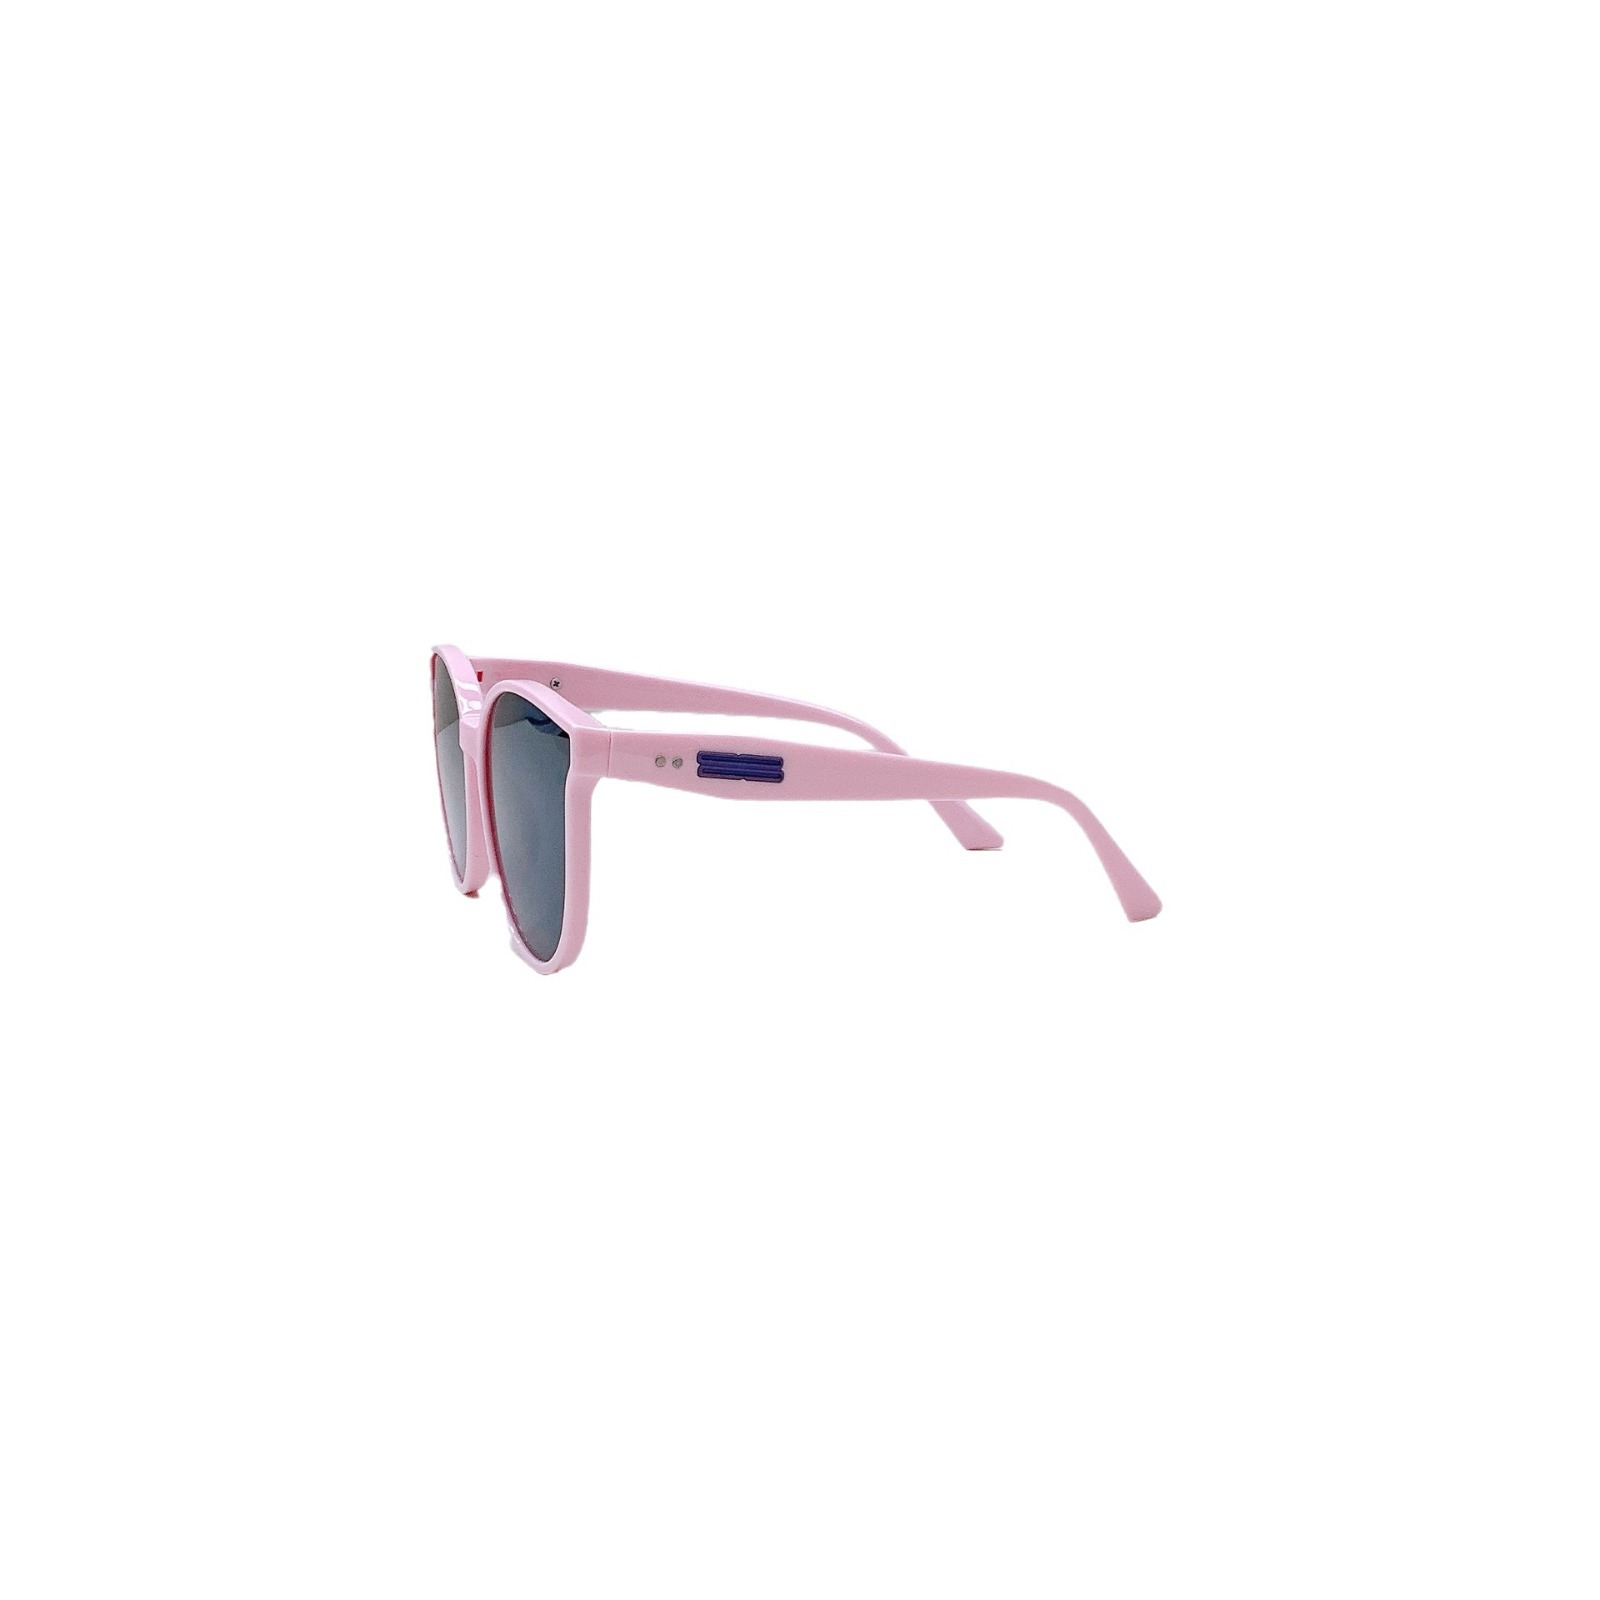 Silicone Polarized Kids Sunglasses Girls Sunglasses Sun-Proof Eye Protection UV Protection for Boys Glasses Wholesale